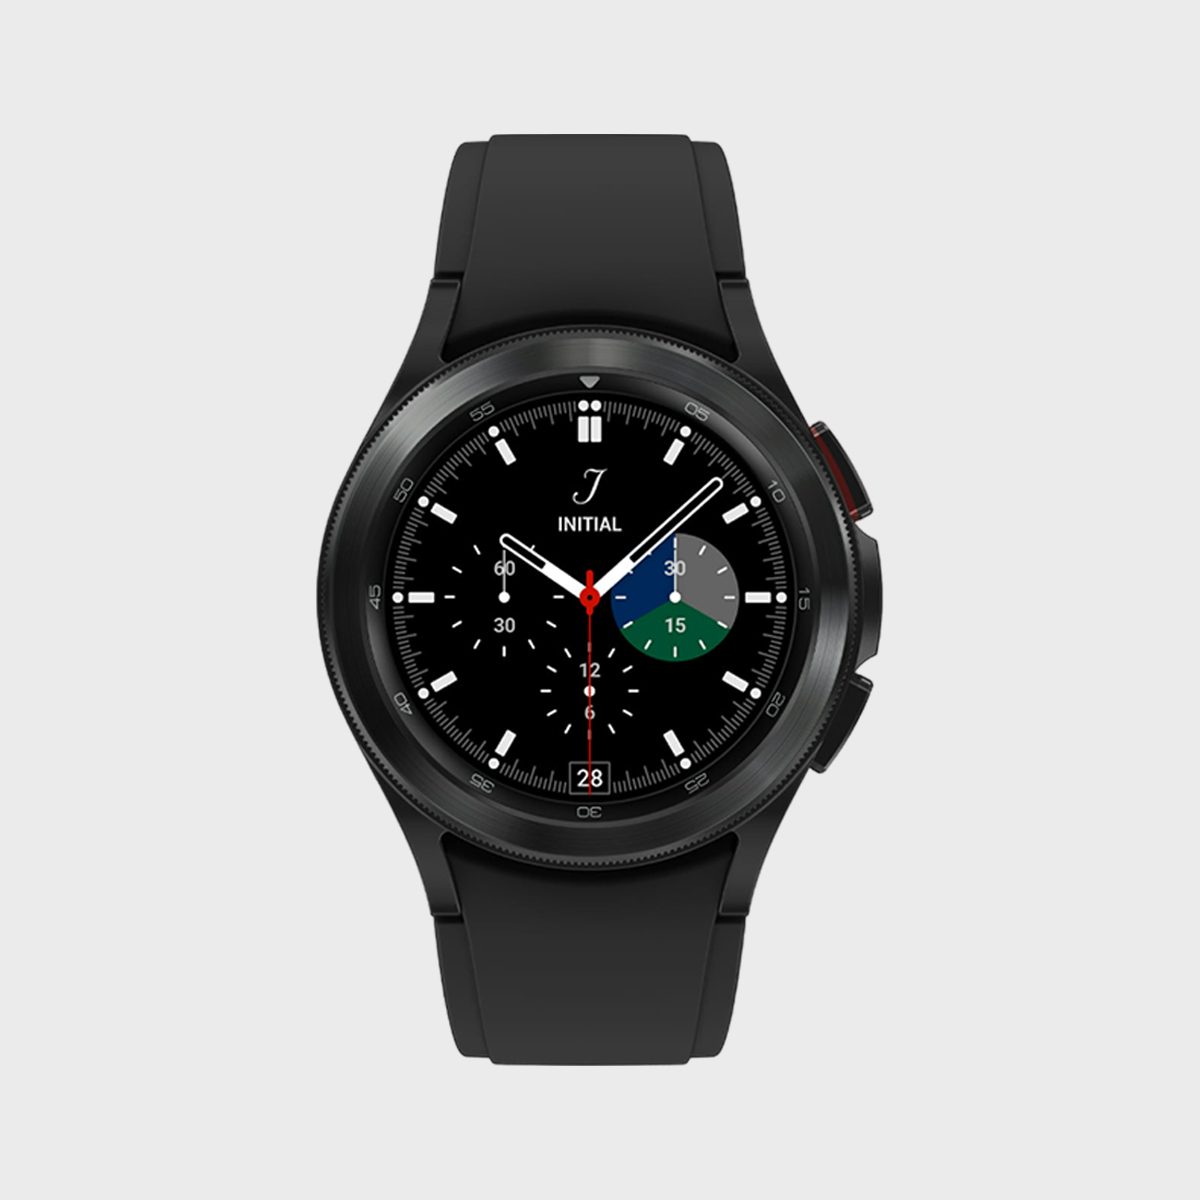 Samsung Galaxy Watch 4 1 Ecomm Via Walmart.com